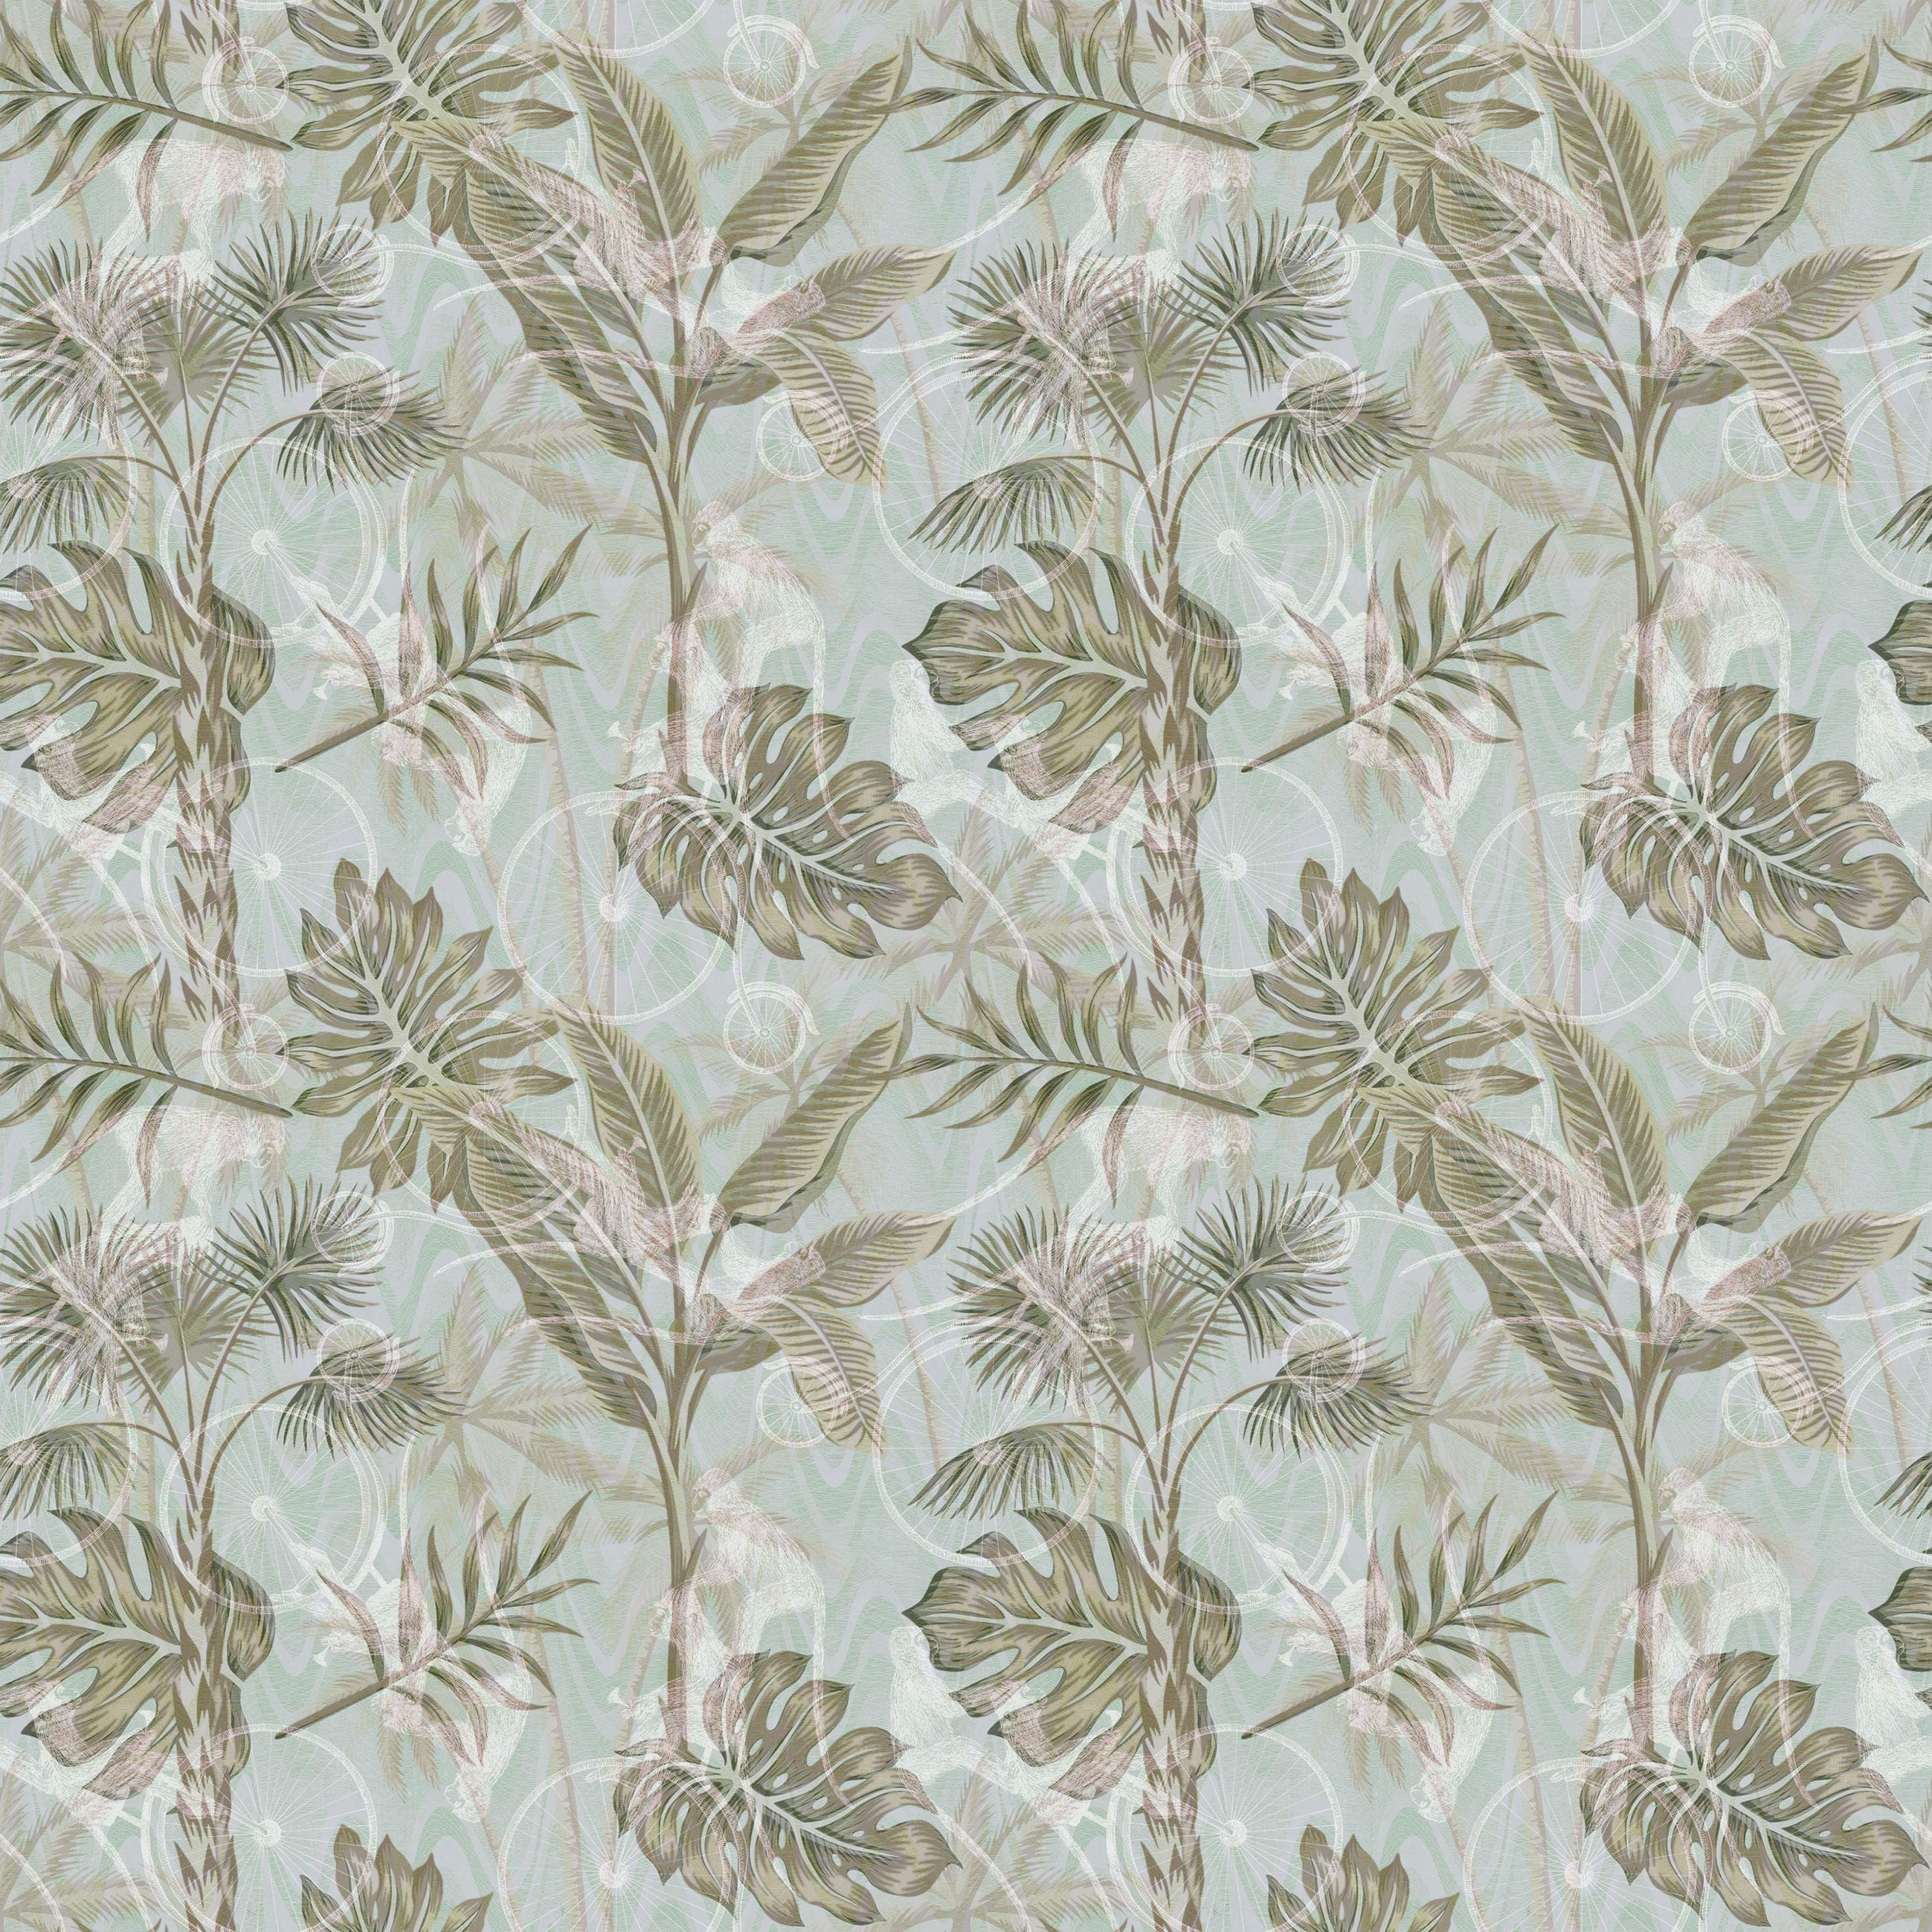 Ornami Pattern Monastera Palm Leaves Vinyl Wallpaper Made in Italy Digital Print For Sale 1